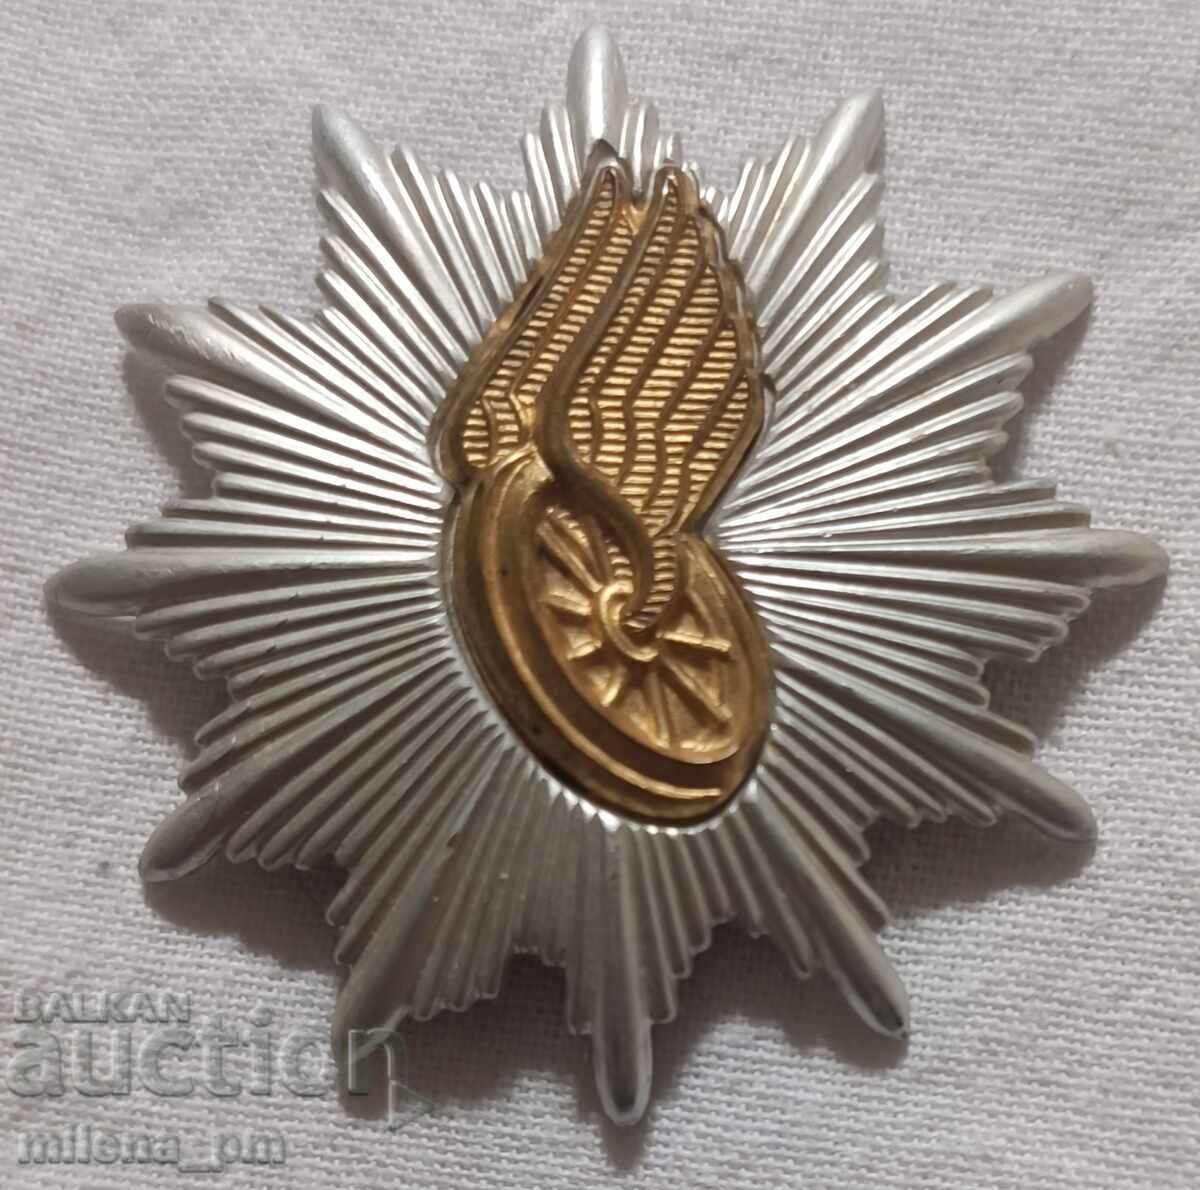 Federal Railway Police Cap Badge